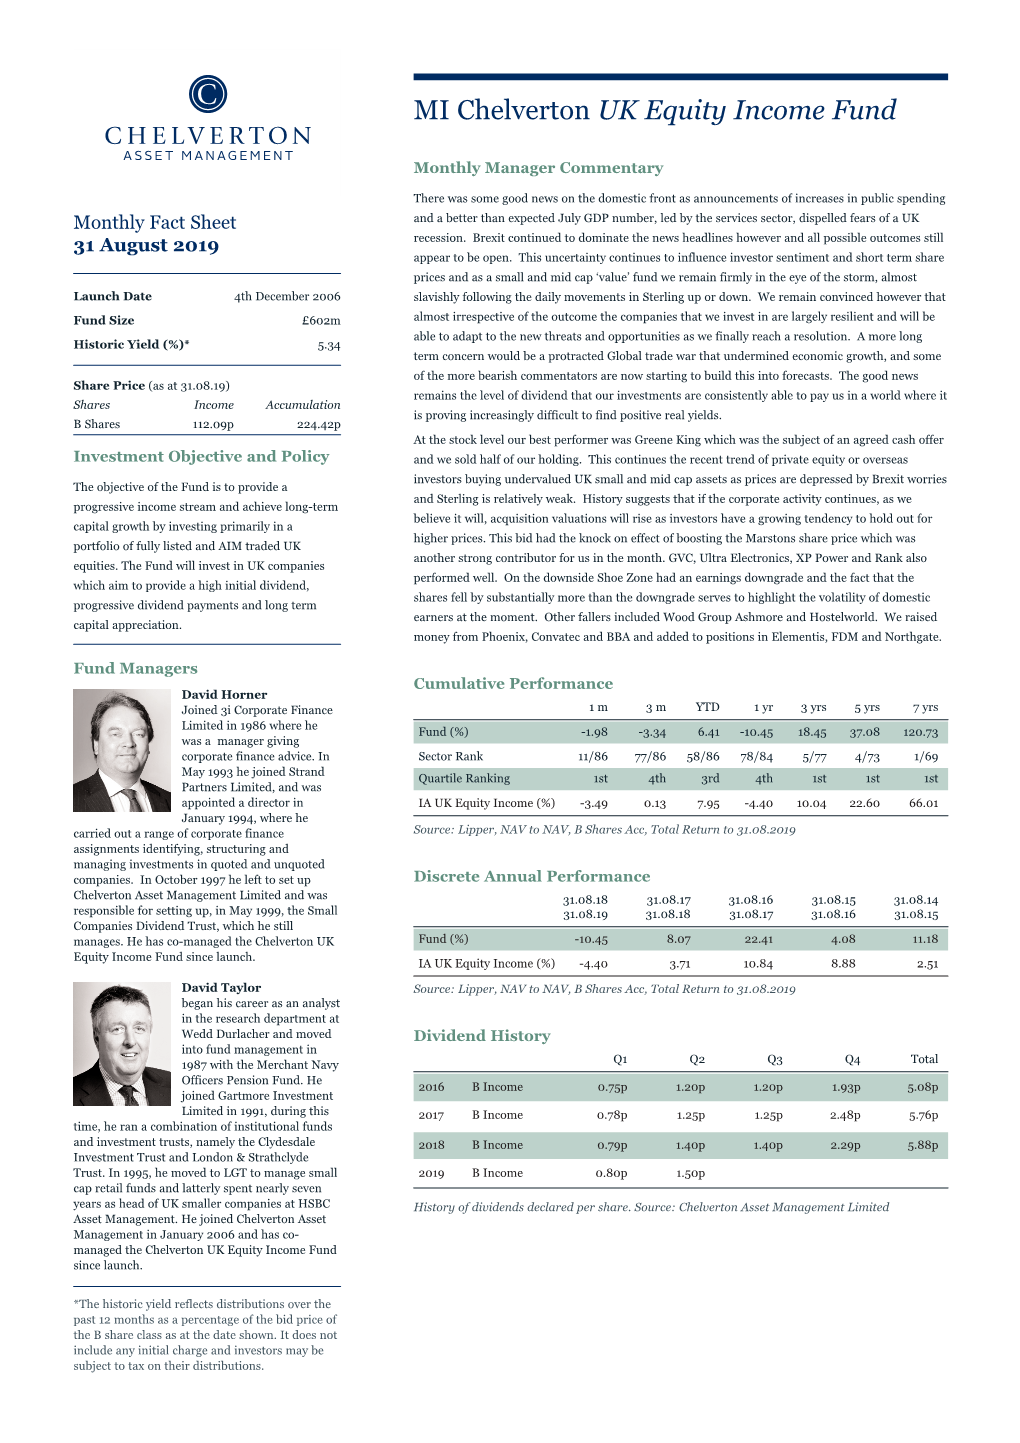 MI Chelverton UK Equity Income Fund – Monthly Factsheet